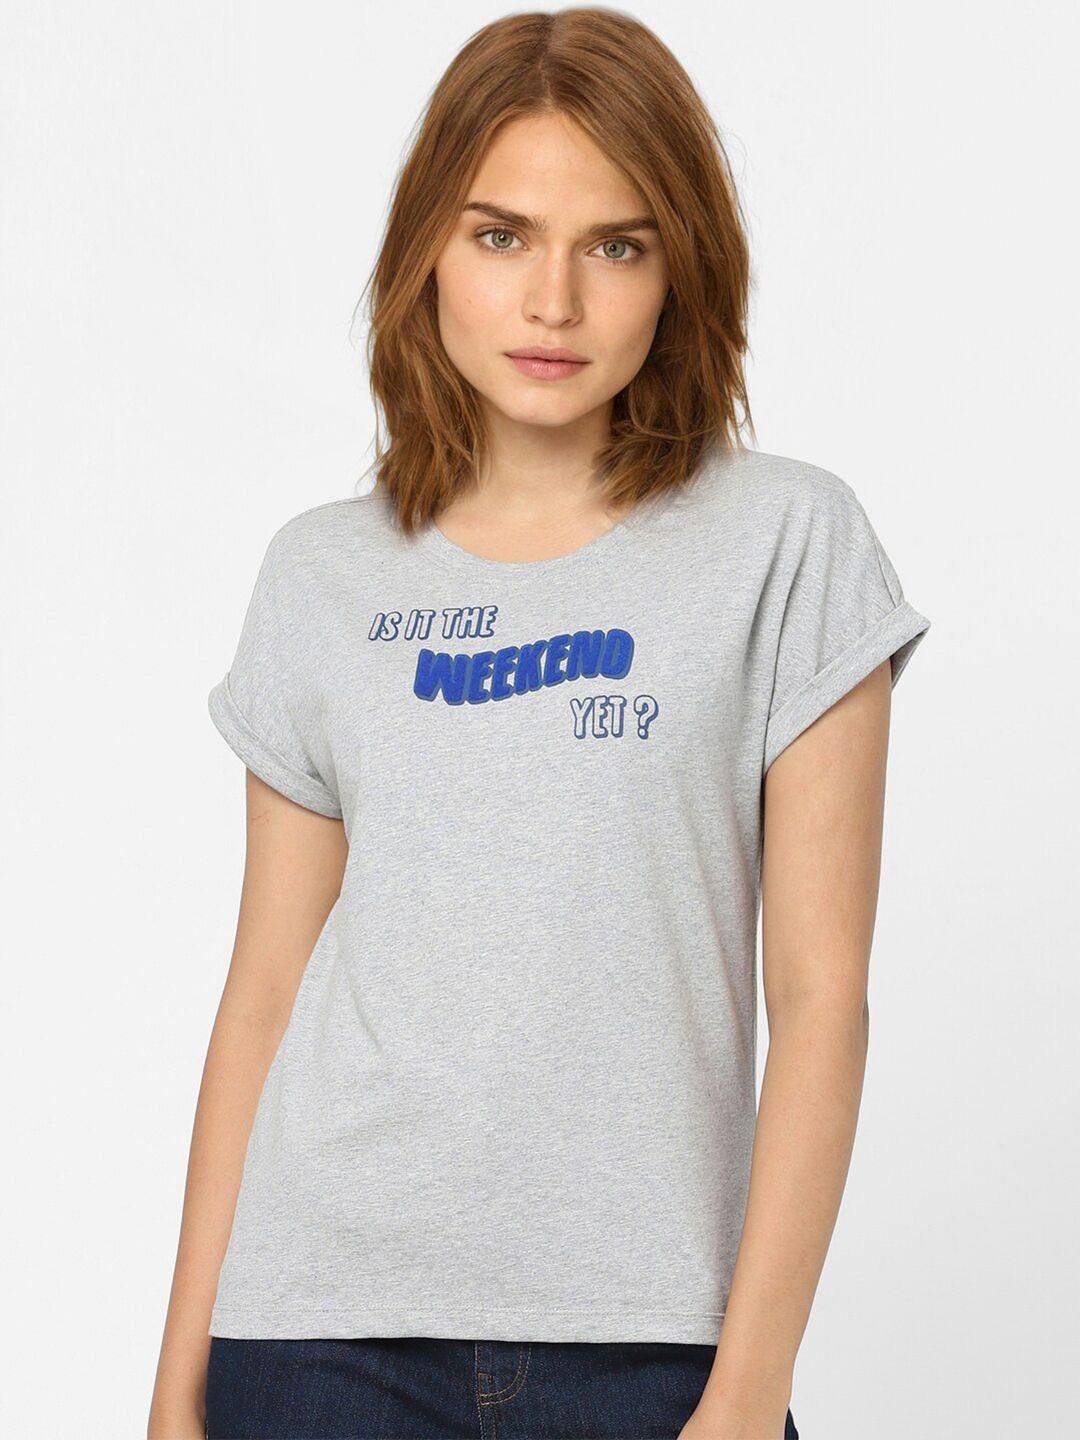 vero moda women grey typography printed extended sleeves t-shirt